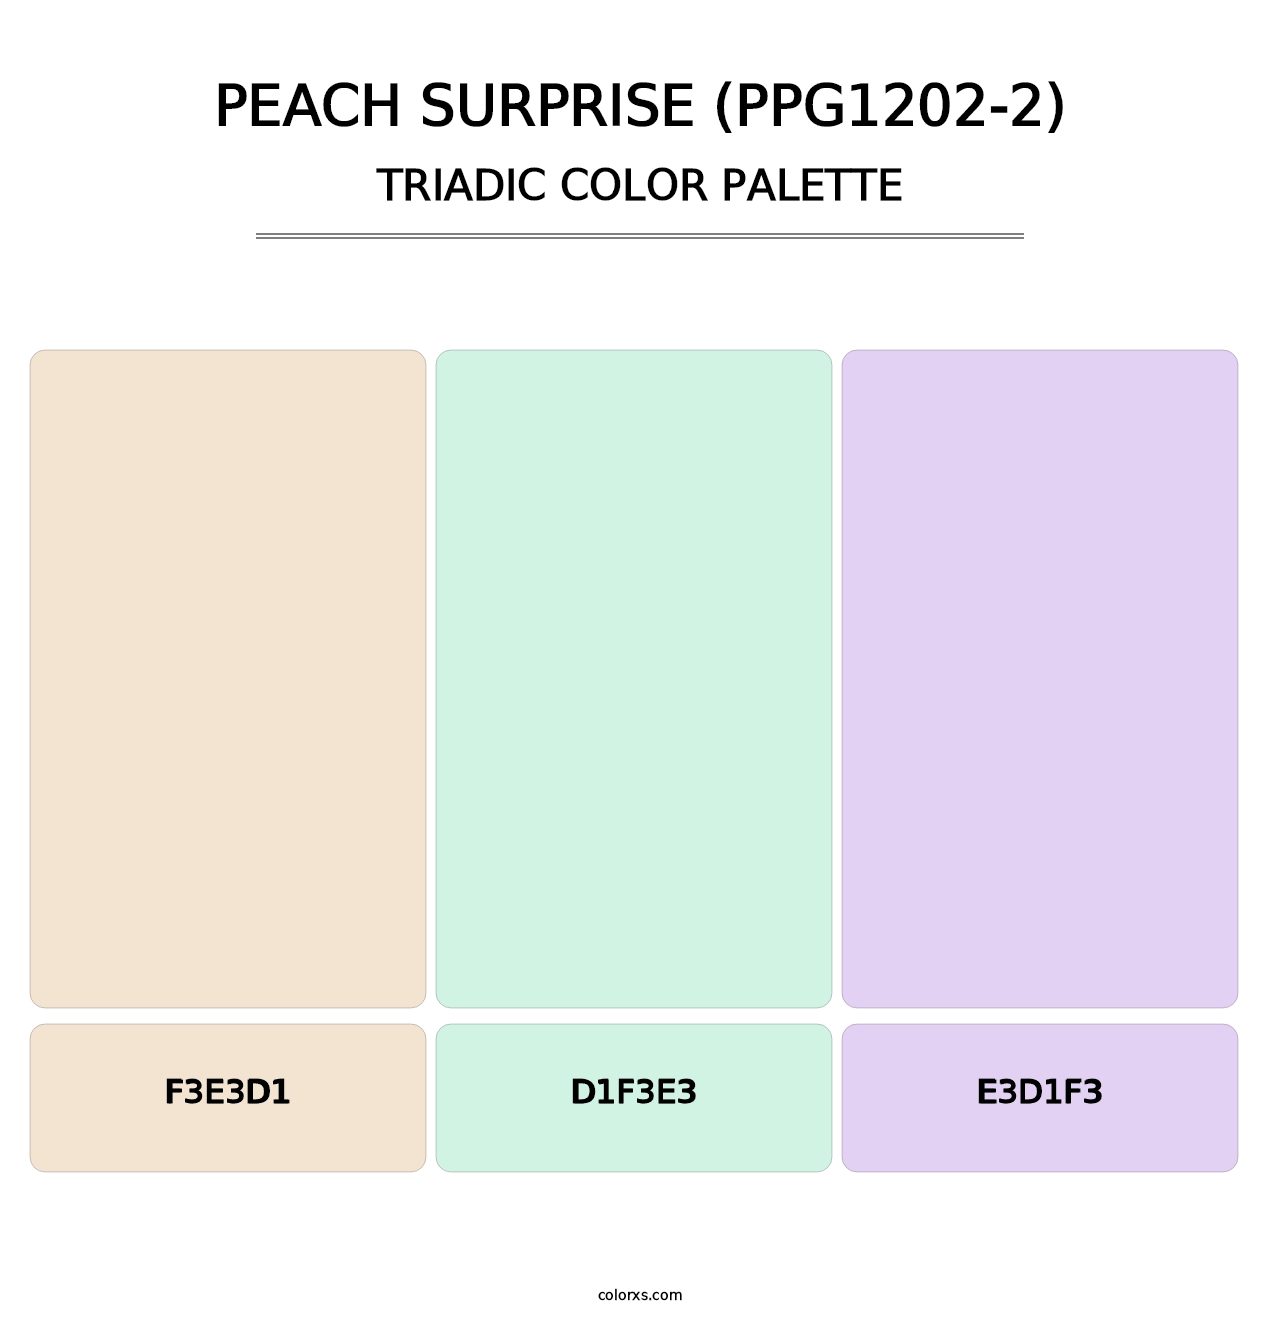 Peach Surprise (PPG1202-2) - Triadic Color Palette